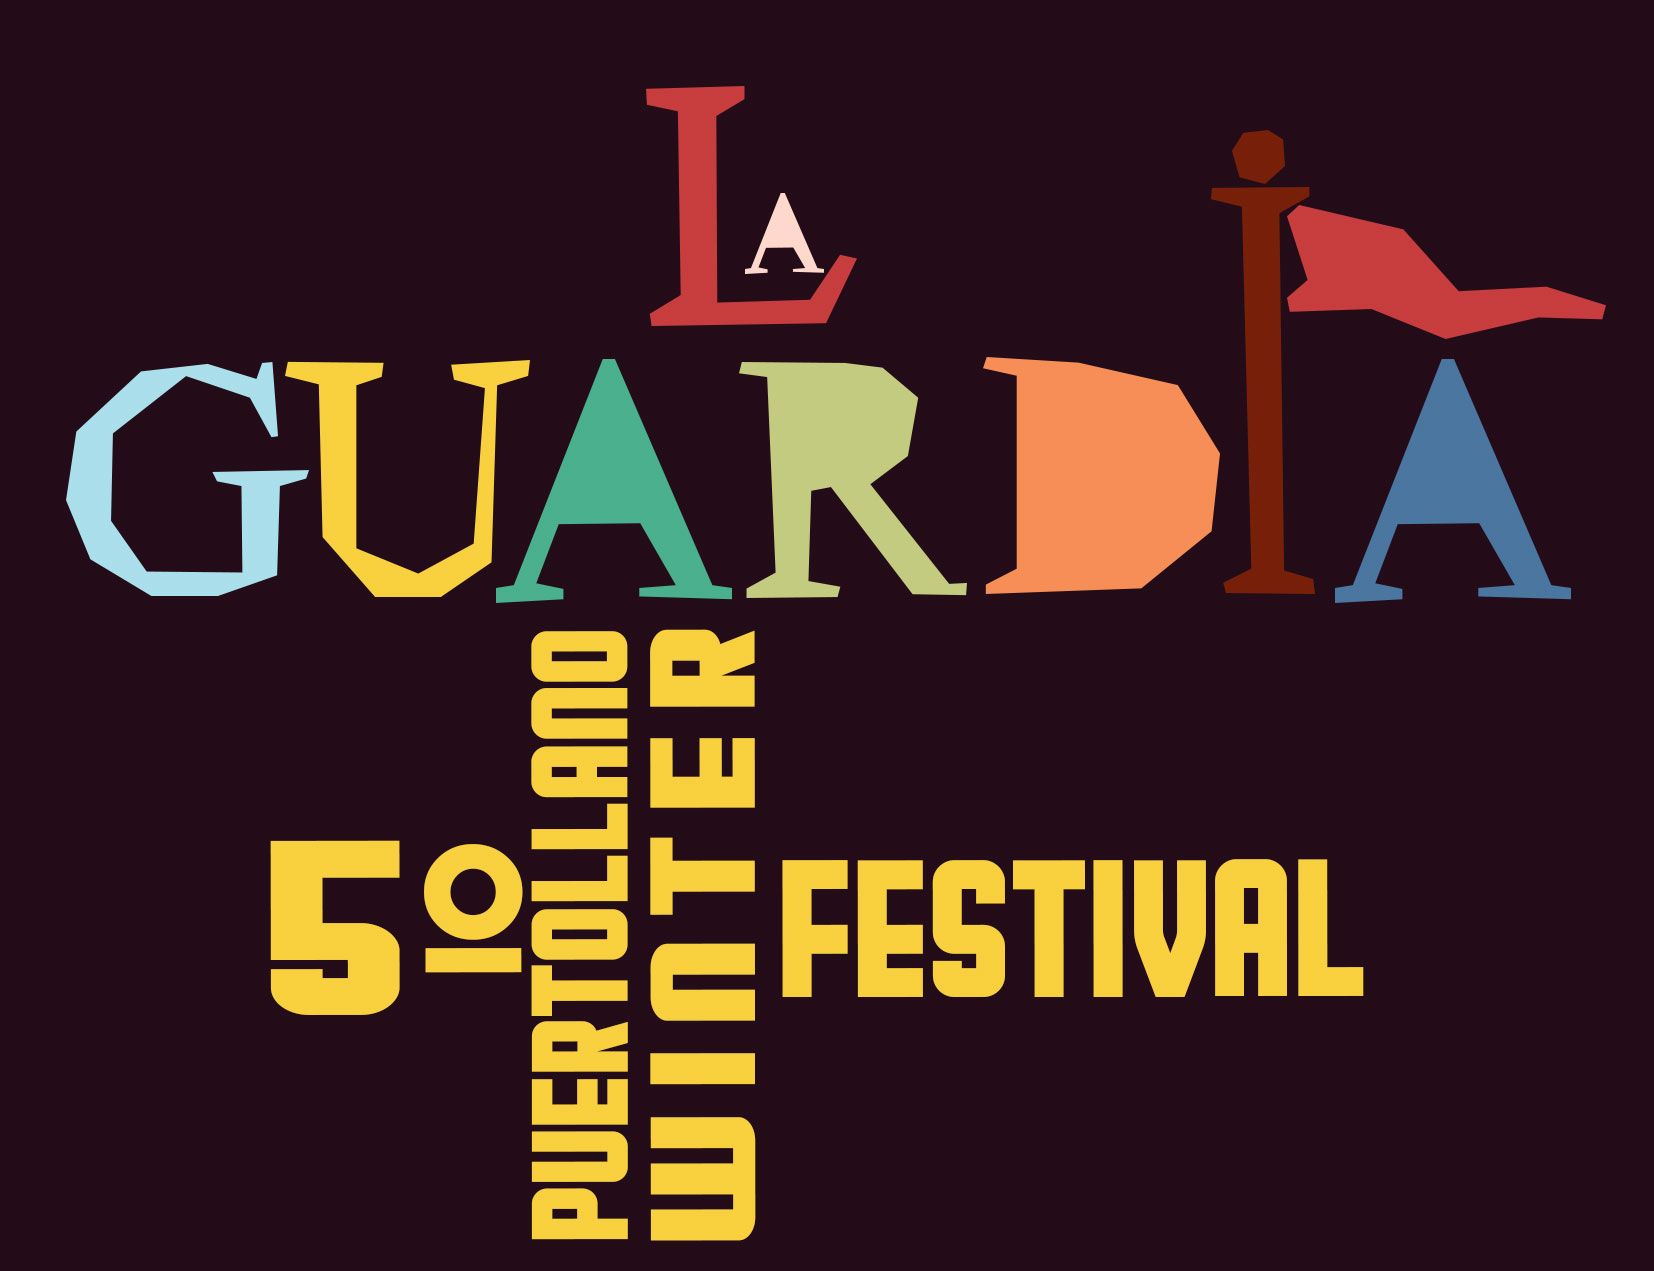 La Guardia el Winter Festival 2022